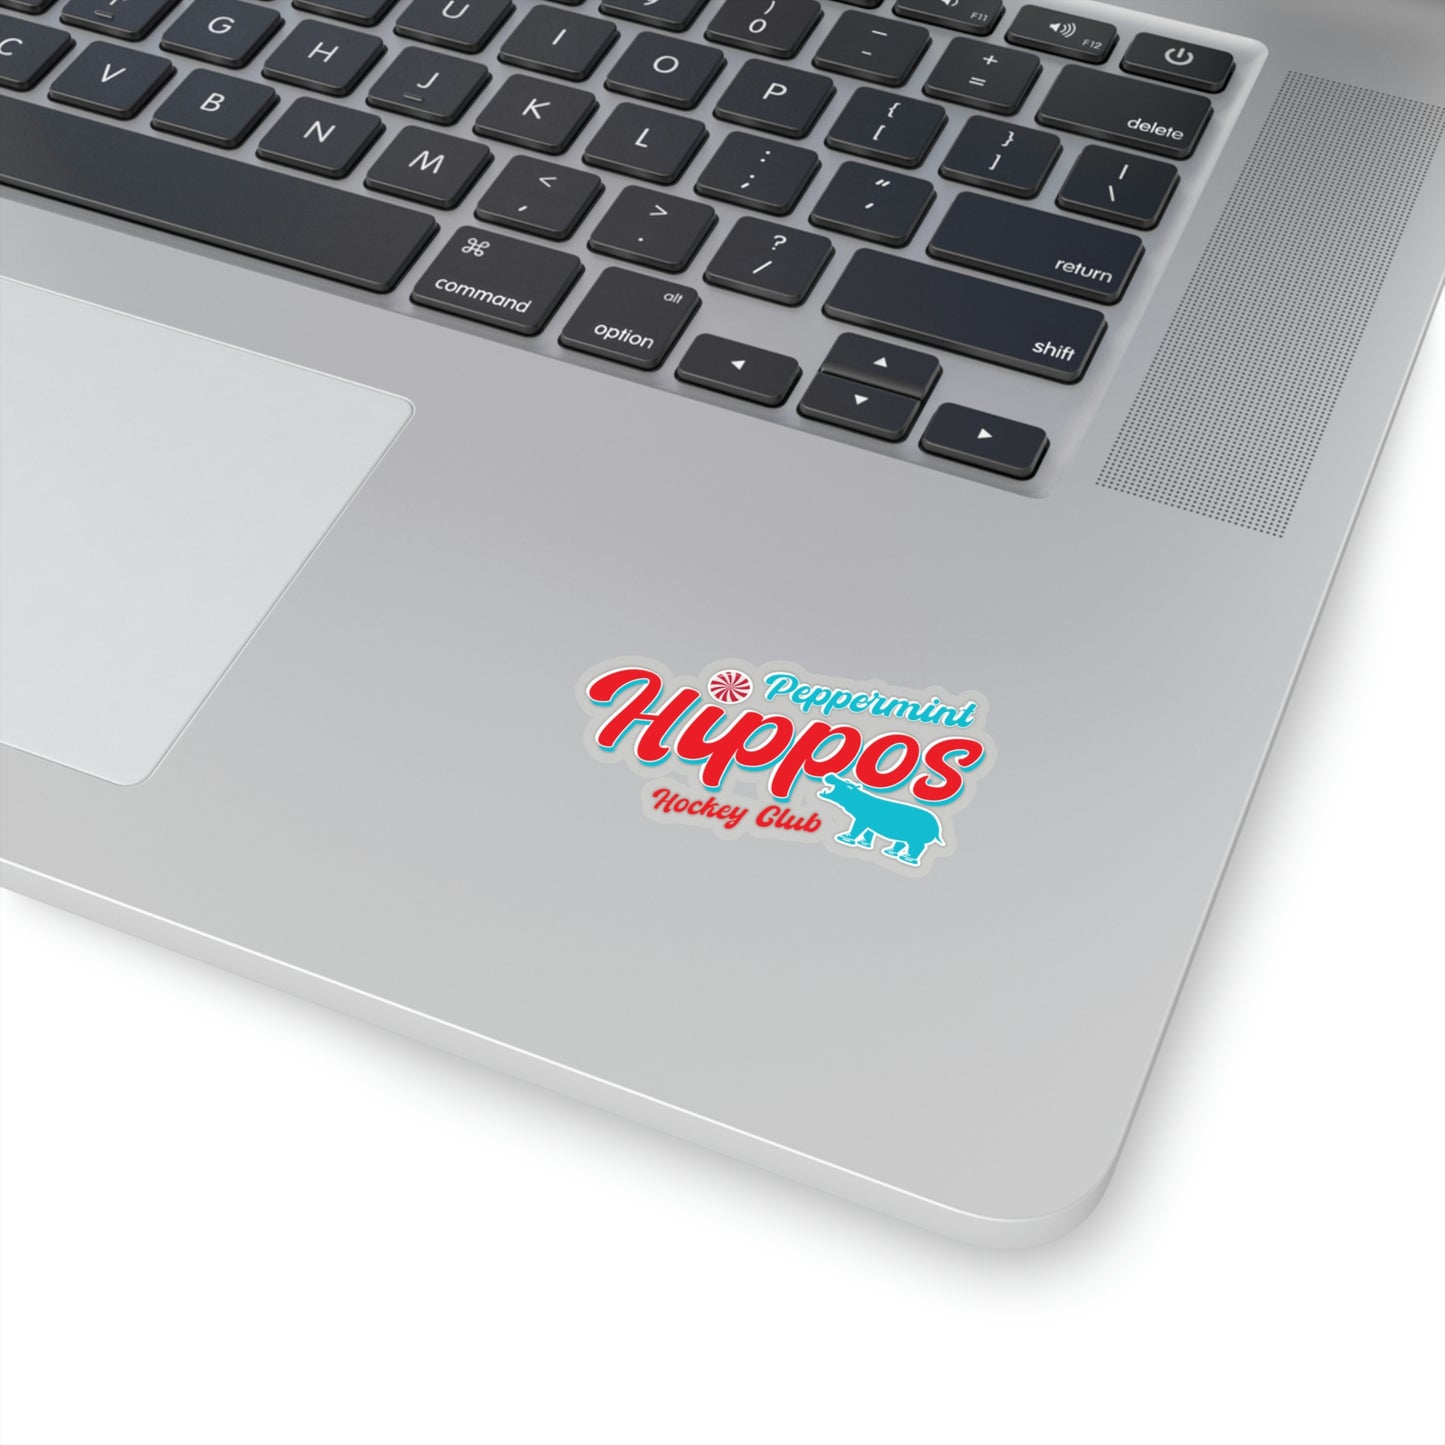 Peppermint Hippo Logo Sticker - Indoor